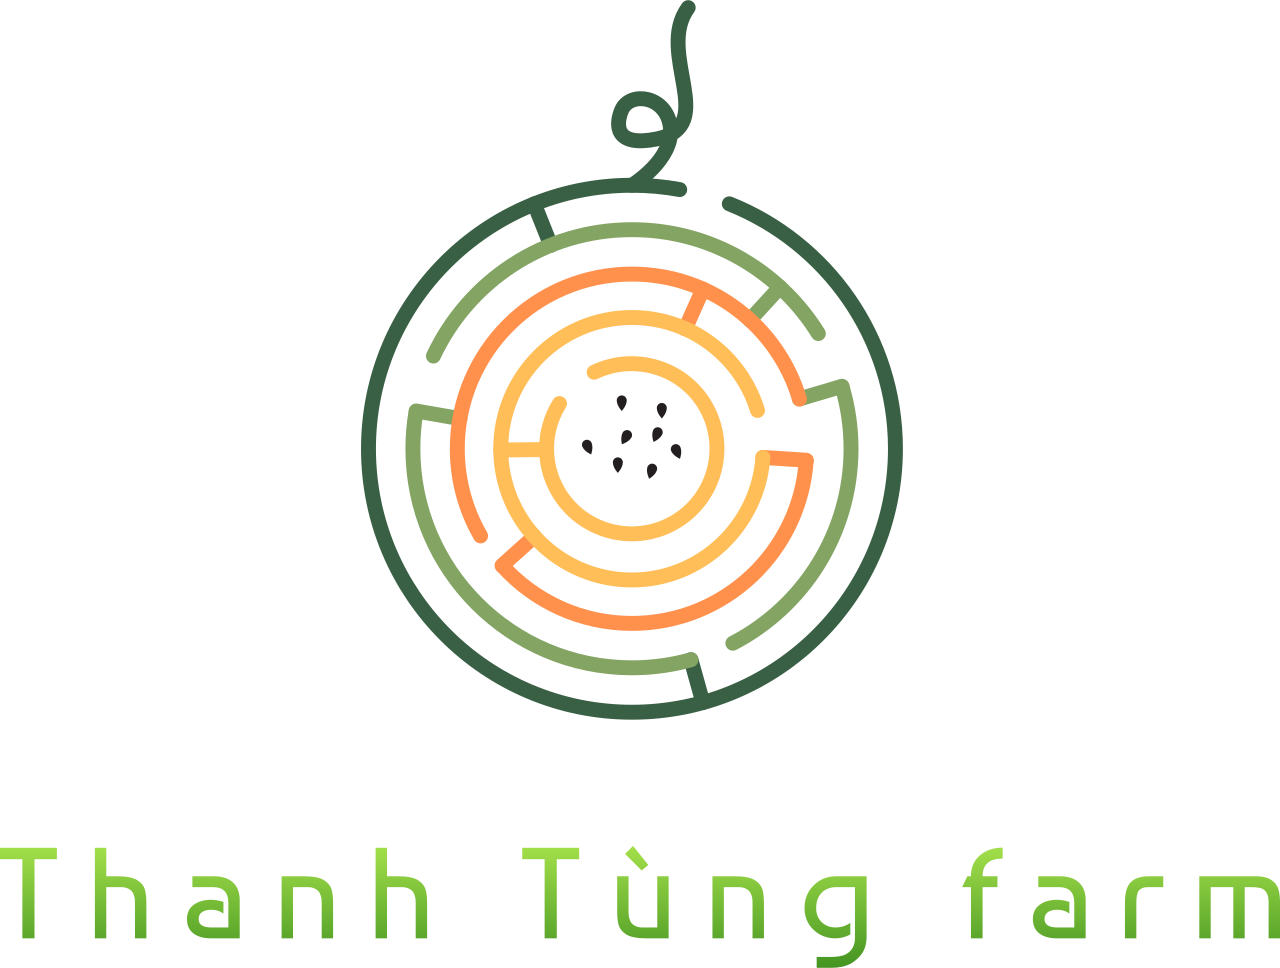 Thanh Tùng farm's web page